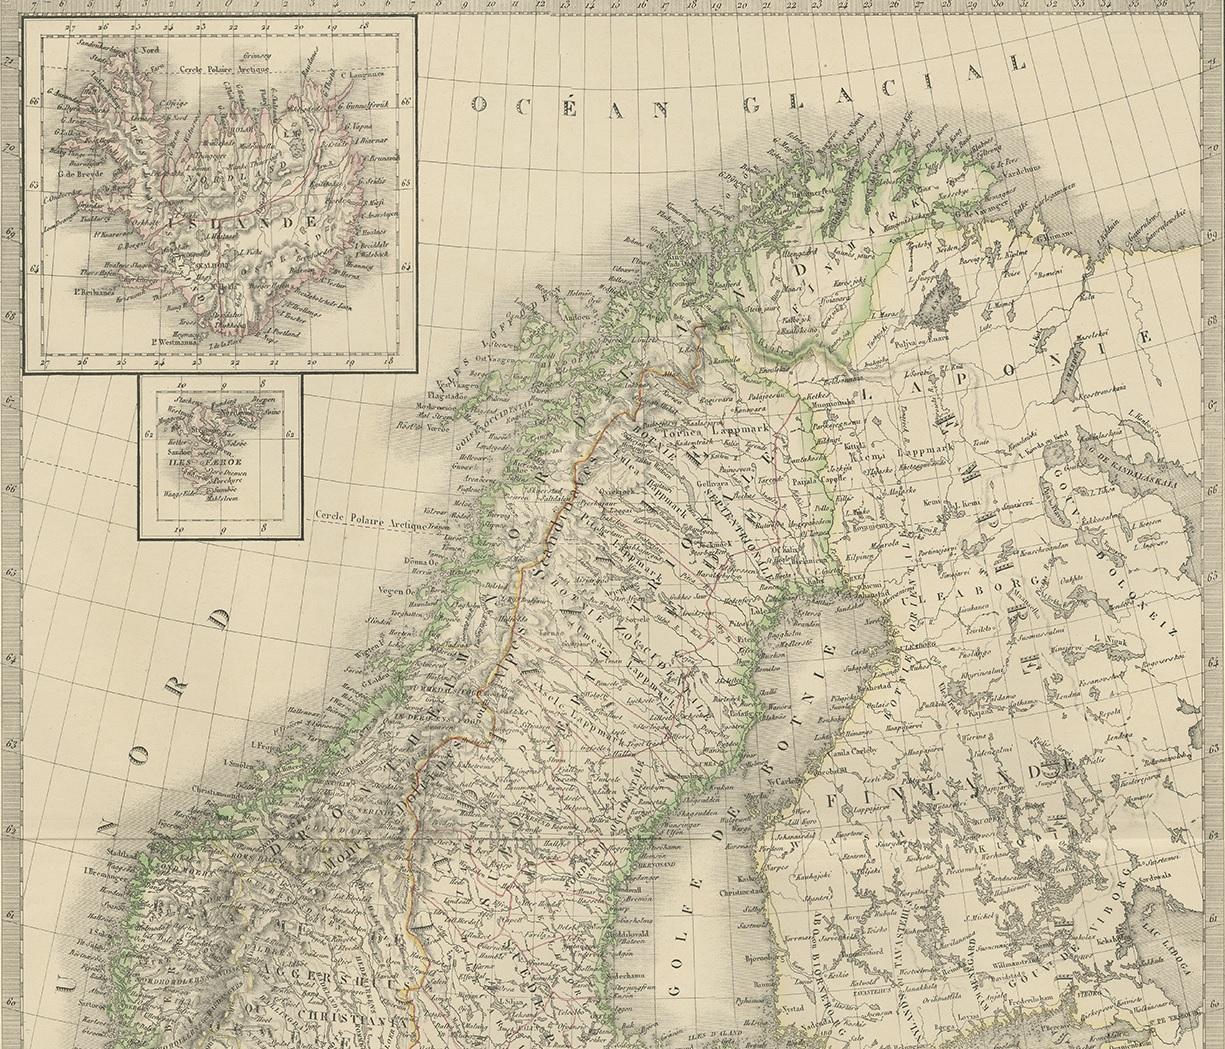 old map of scandinavia